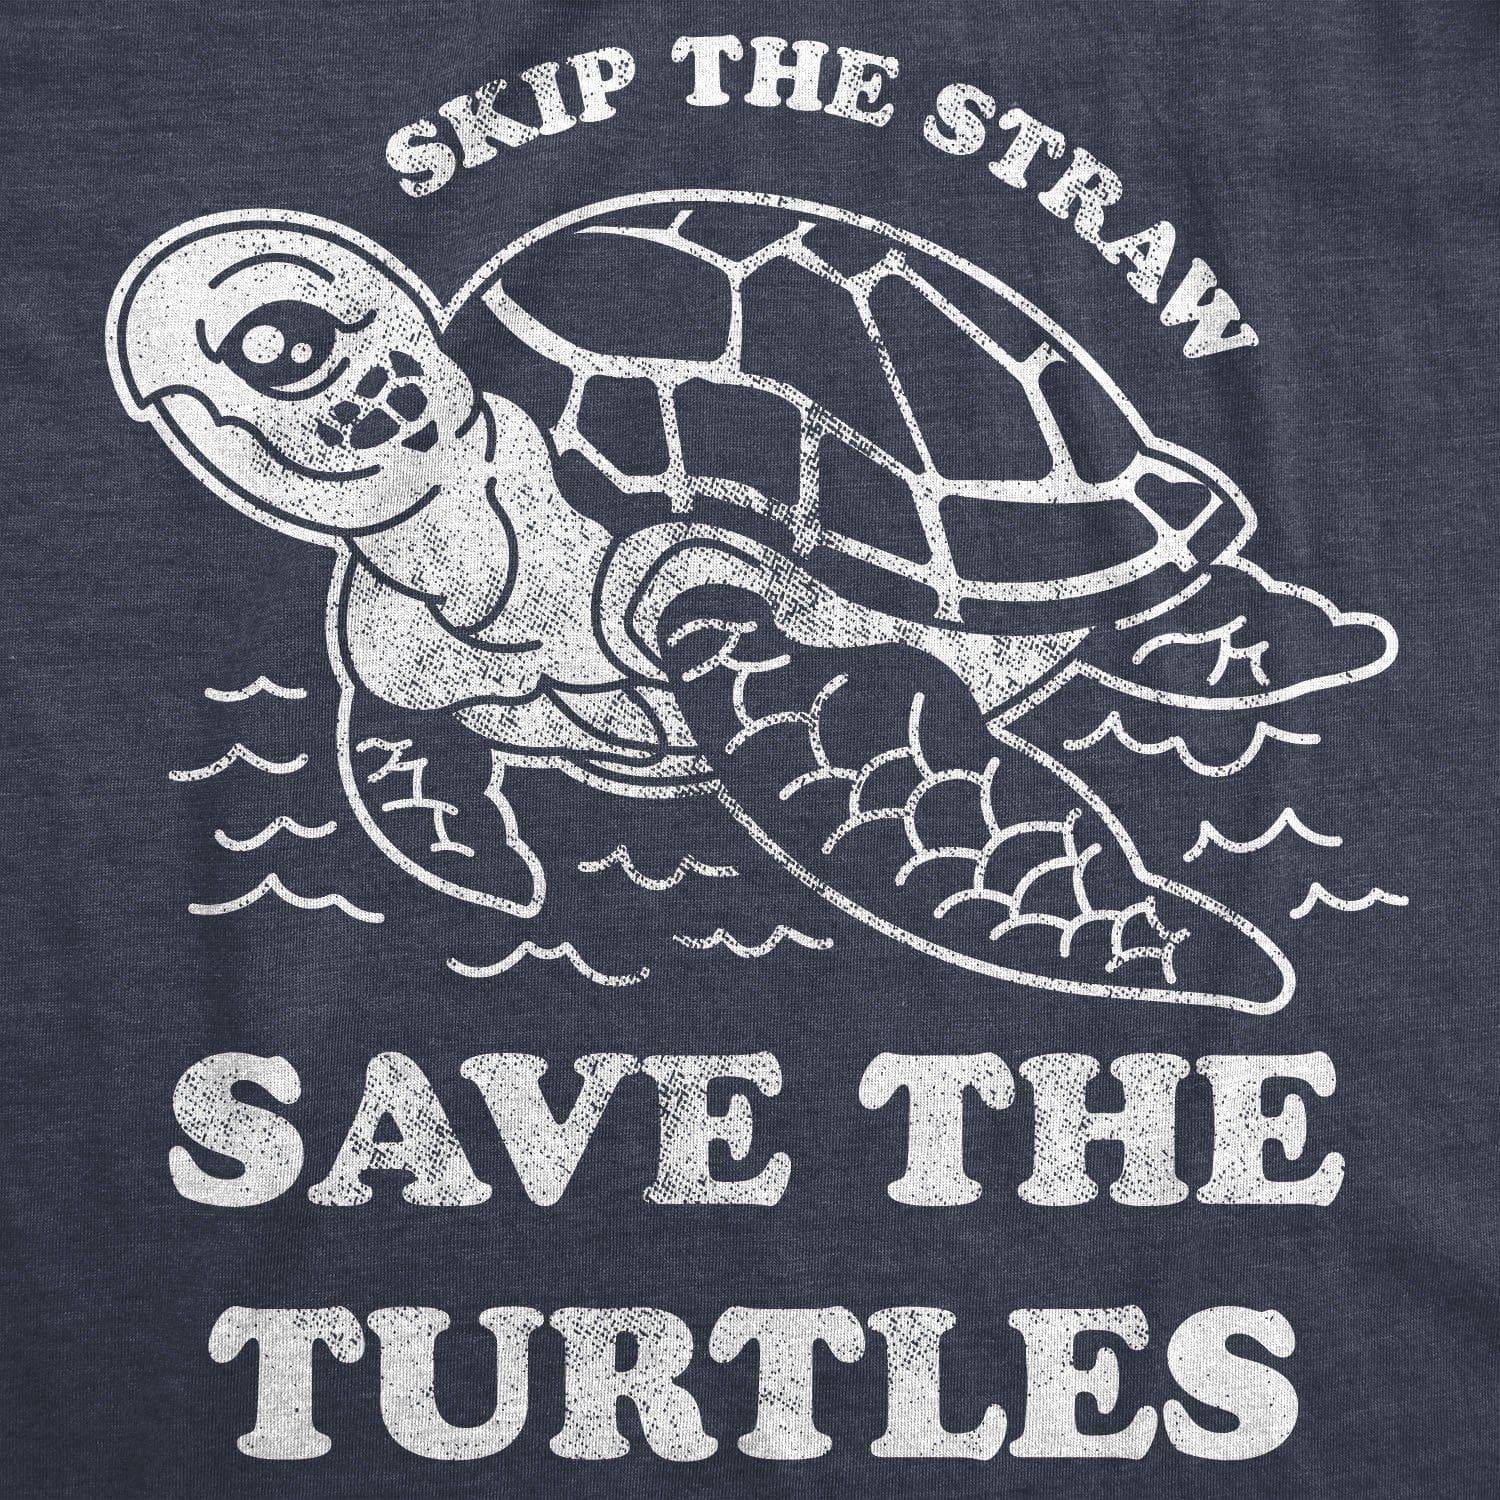 Save The Turtles Men's Tshirt  -  Crazy Dog T-Shirts